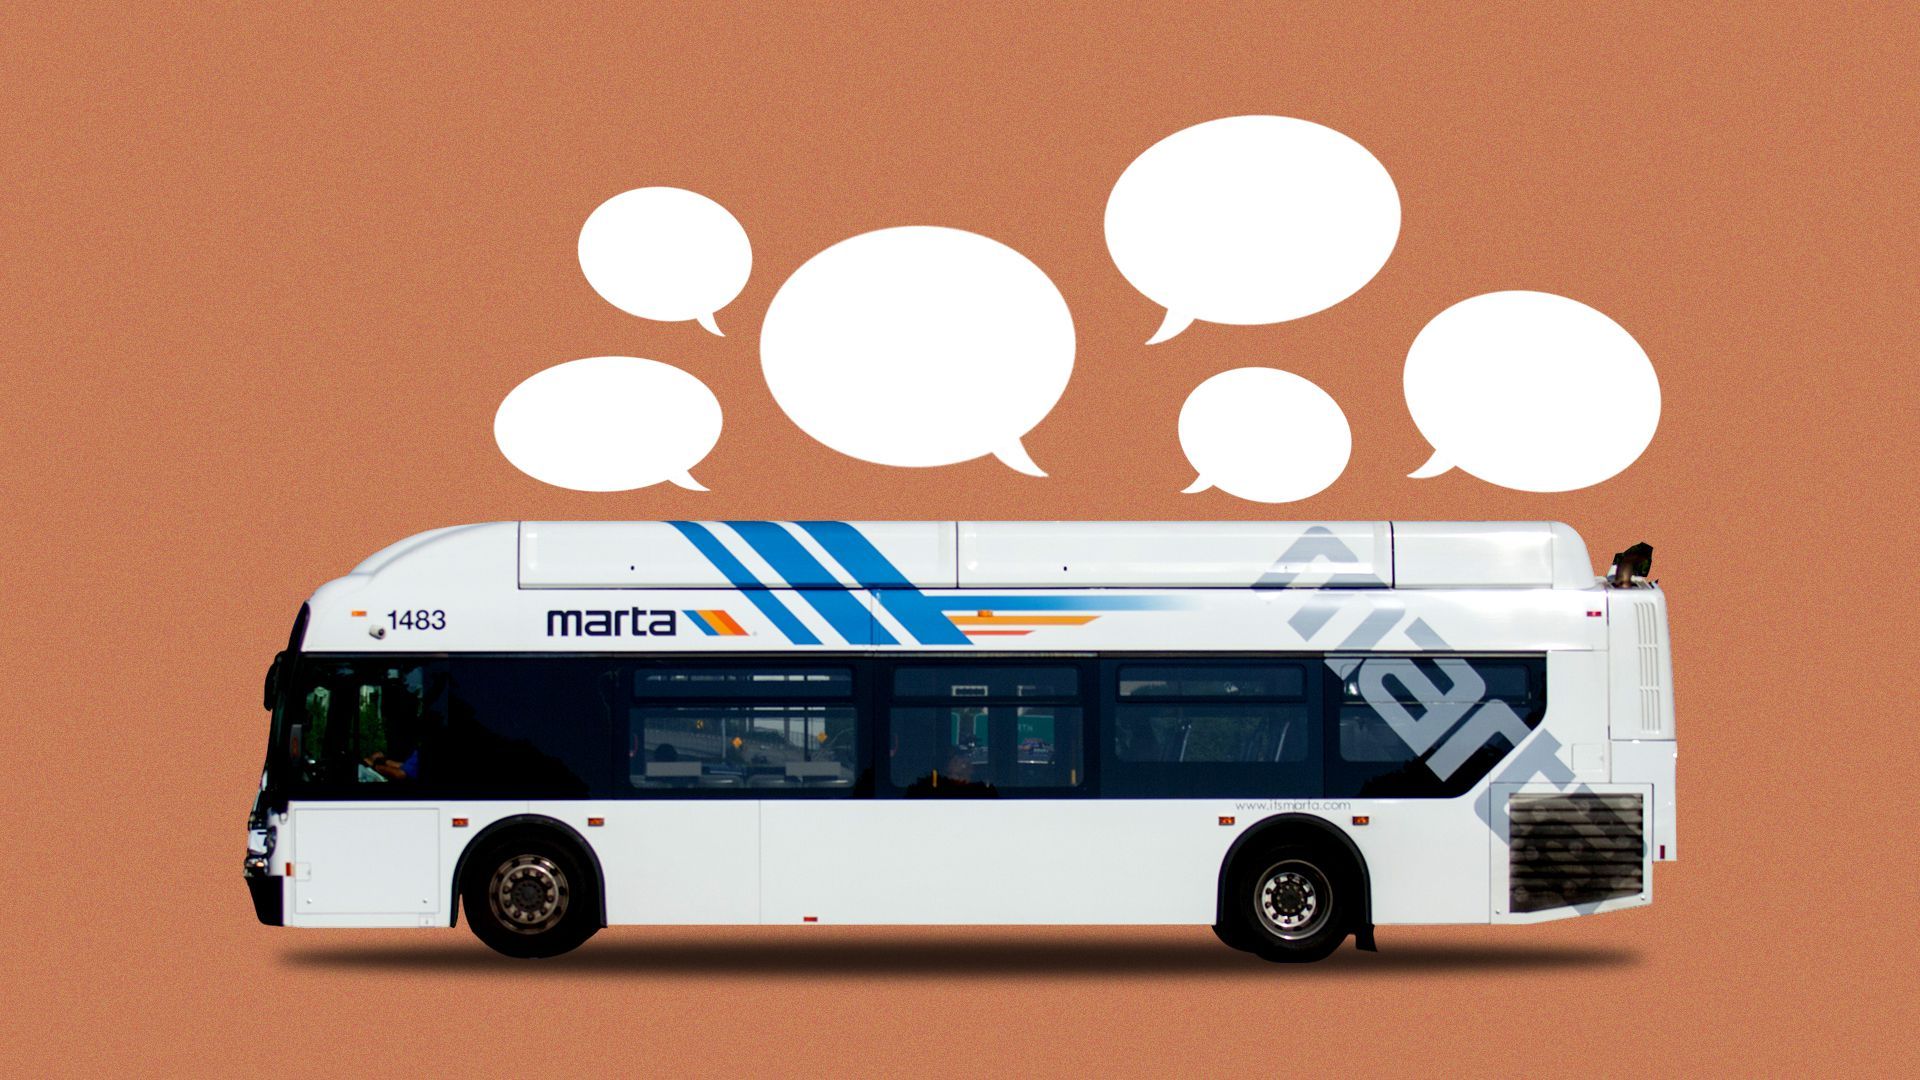 Illustration of Marta bus with speech bubbles